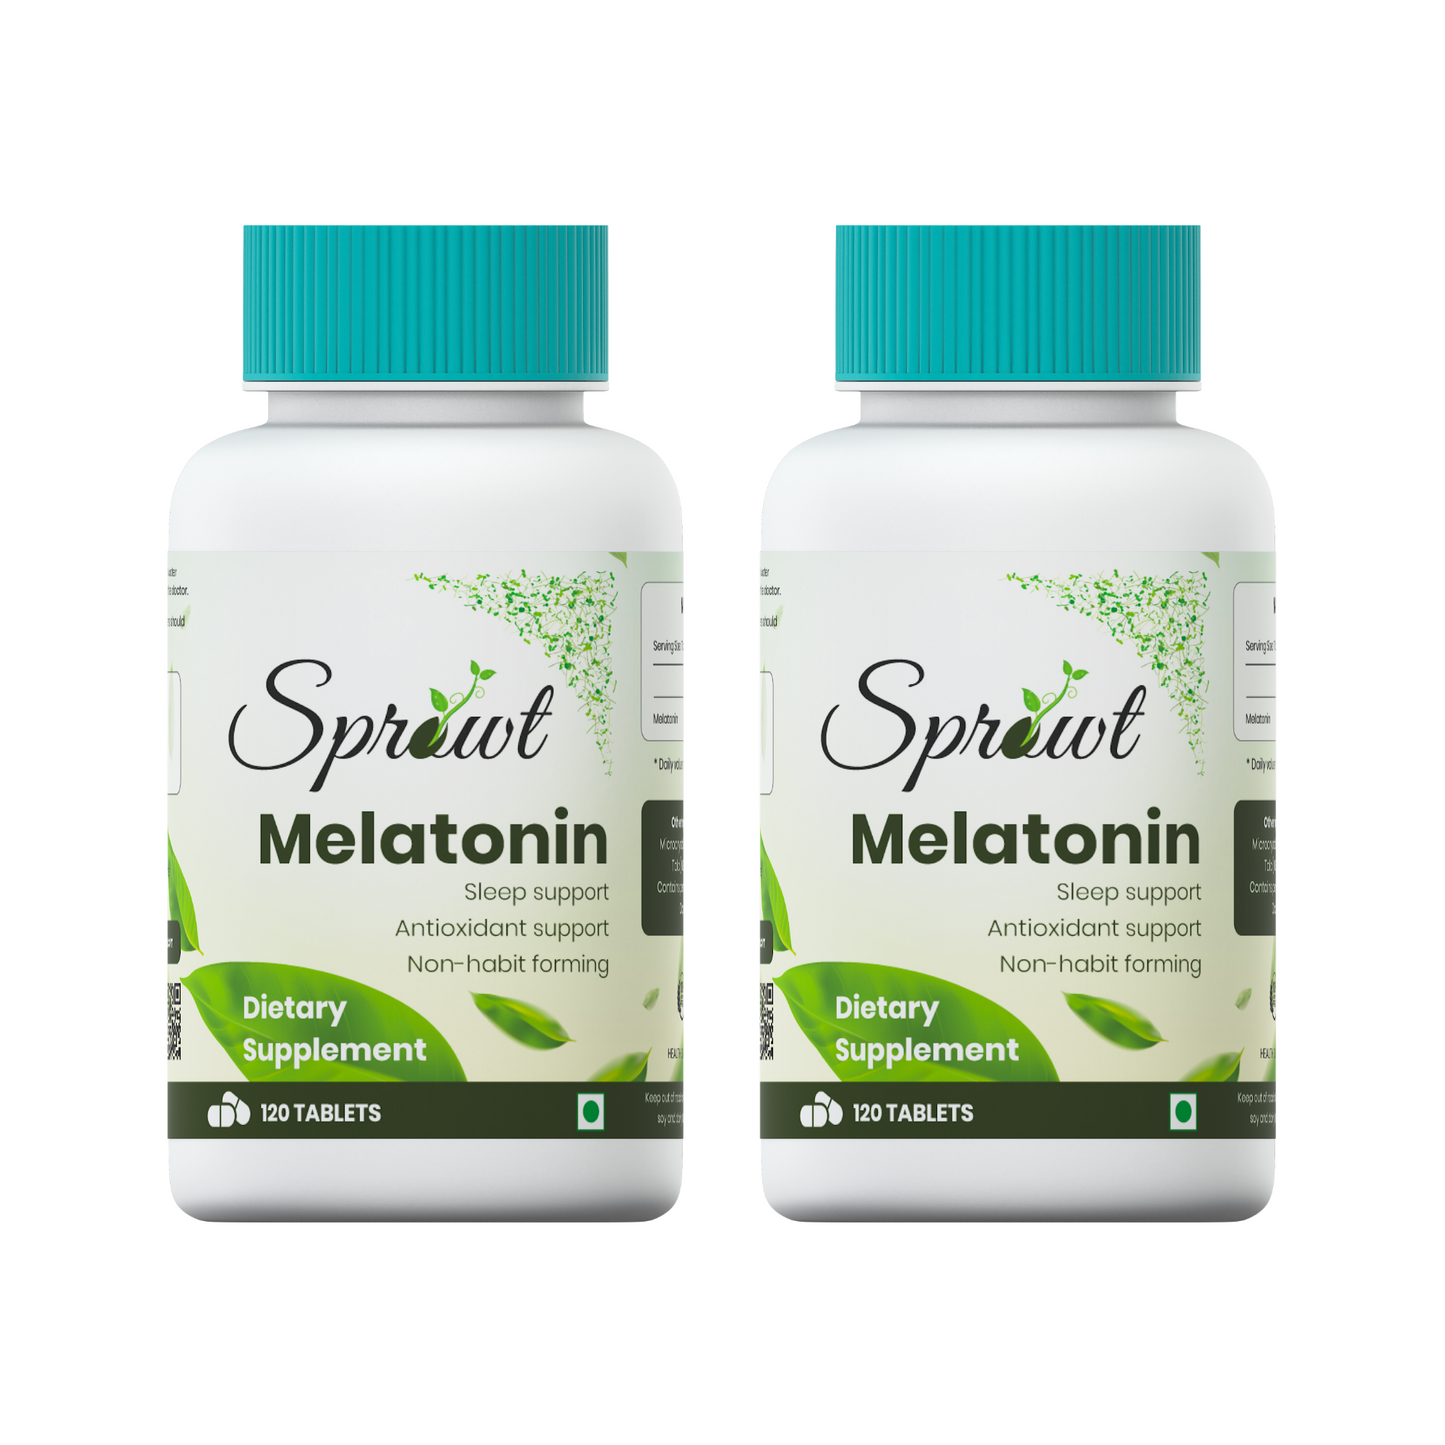 Sprowt Melatonin 10mg Sleeping Aid Pills | Sleep Supplement-Pack of 2, 120 Tablets Each